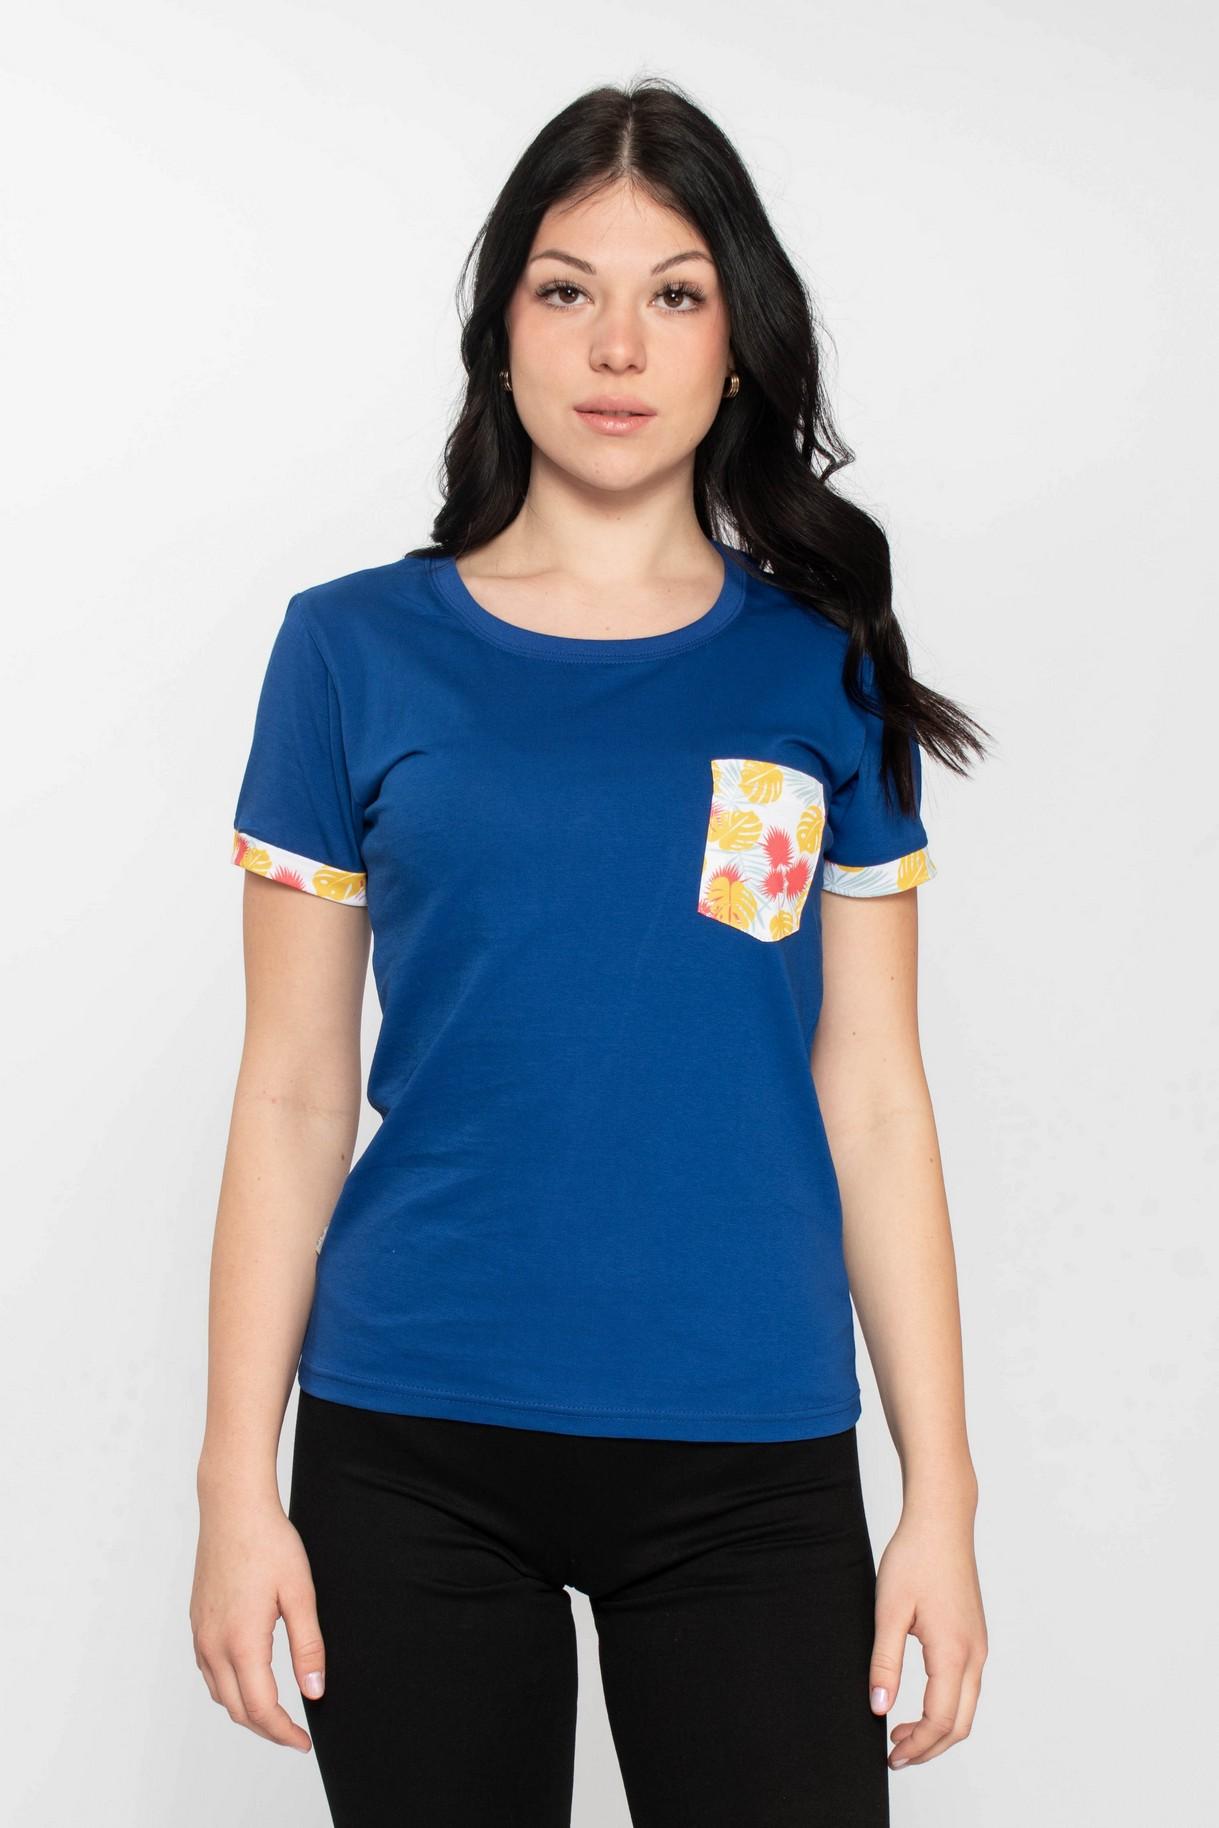 Selected image for RUSH Ženska majica Basic plava